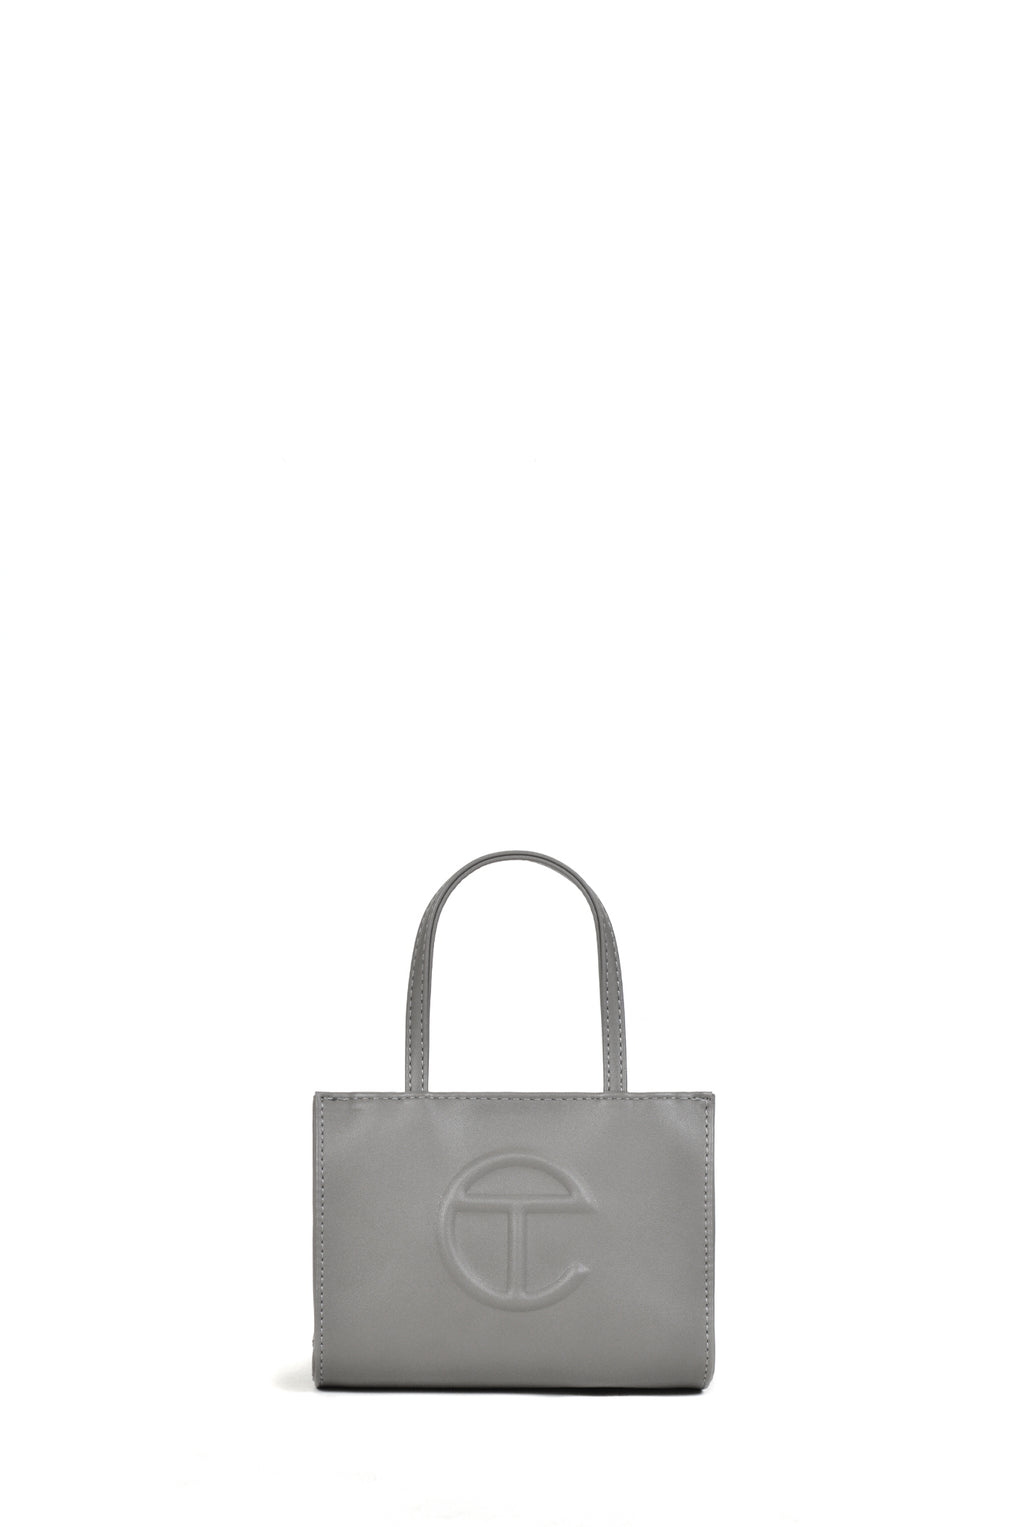 Telfar Small Shopping Bag, Grey